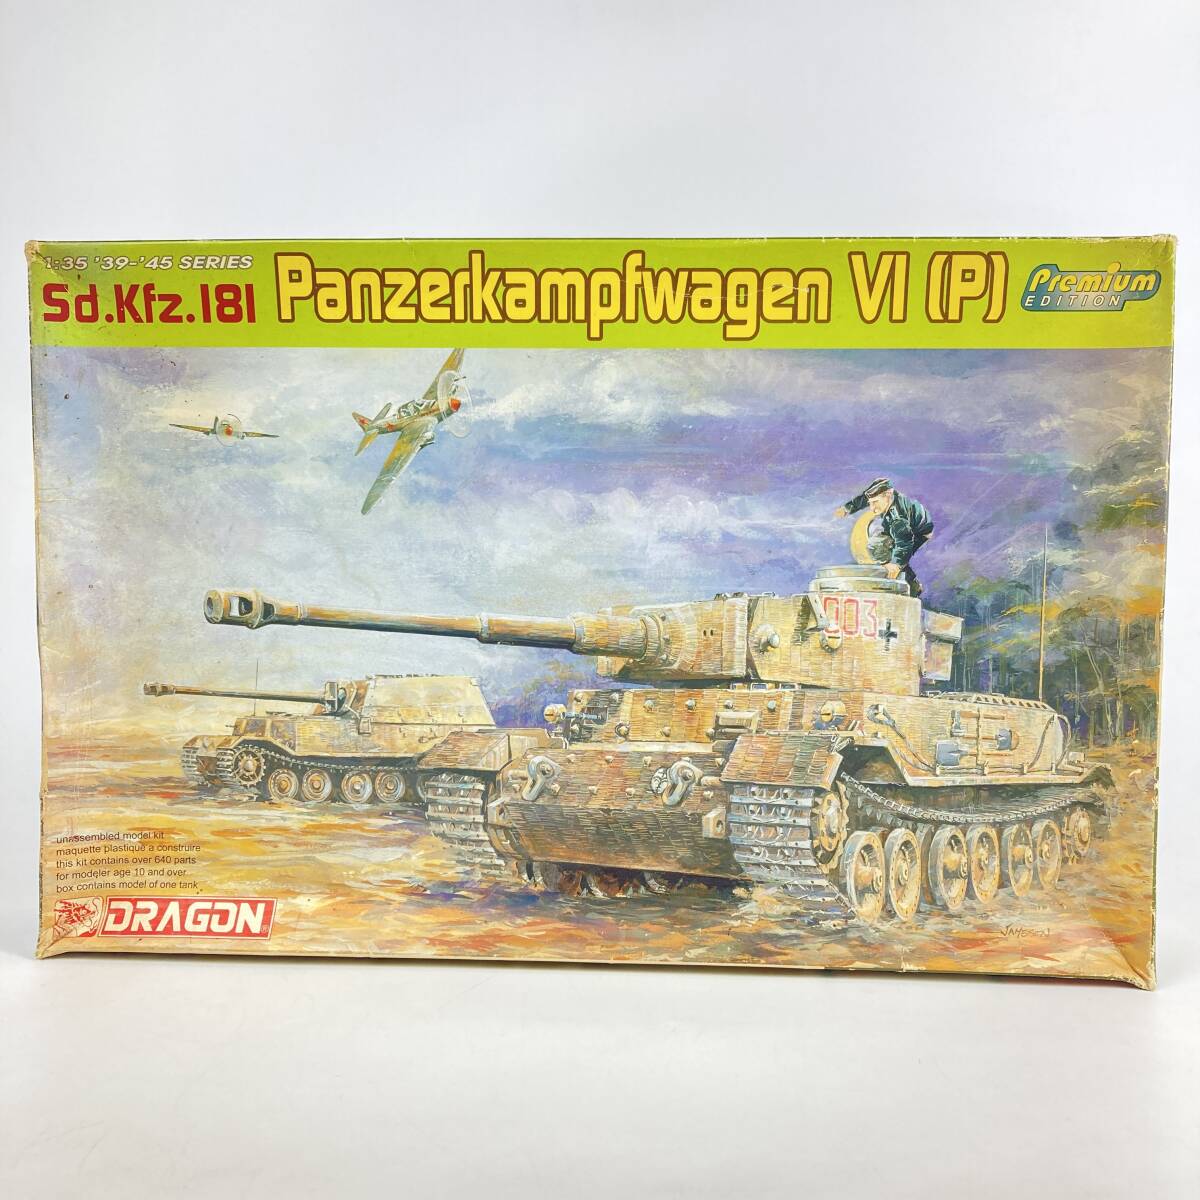 RX0018 ドラゴン 1/35 Sd.Kfz.181 Panzerkampfwagen VI (P) Premium EDITION プラモデル 手付け品 ジャンク_画像1